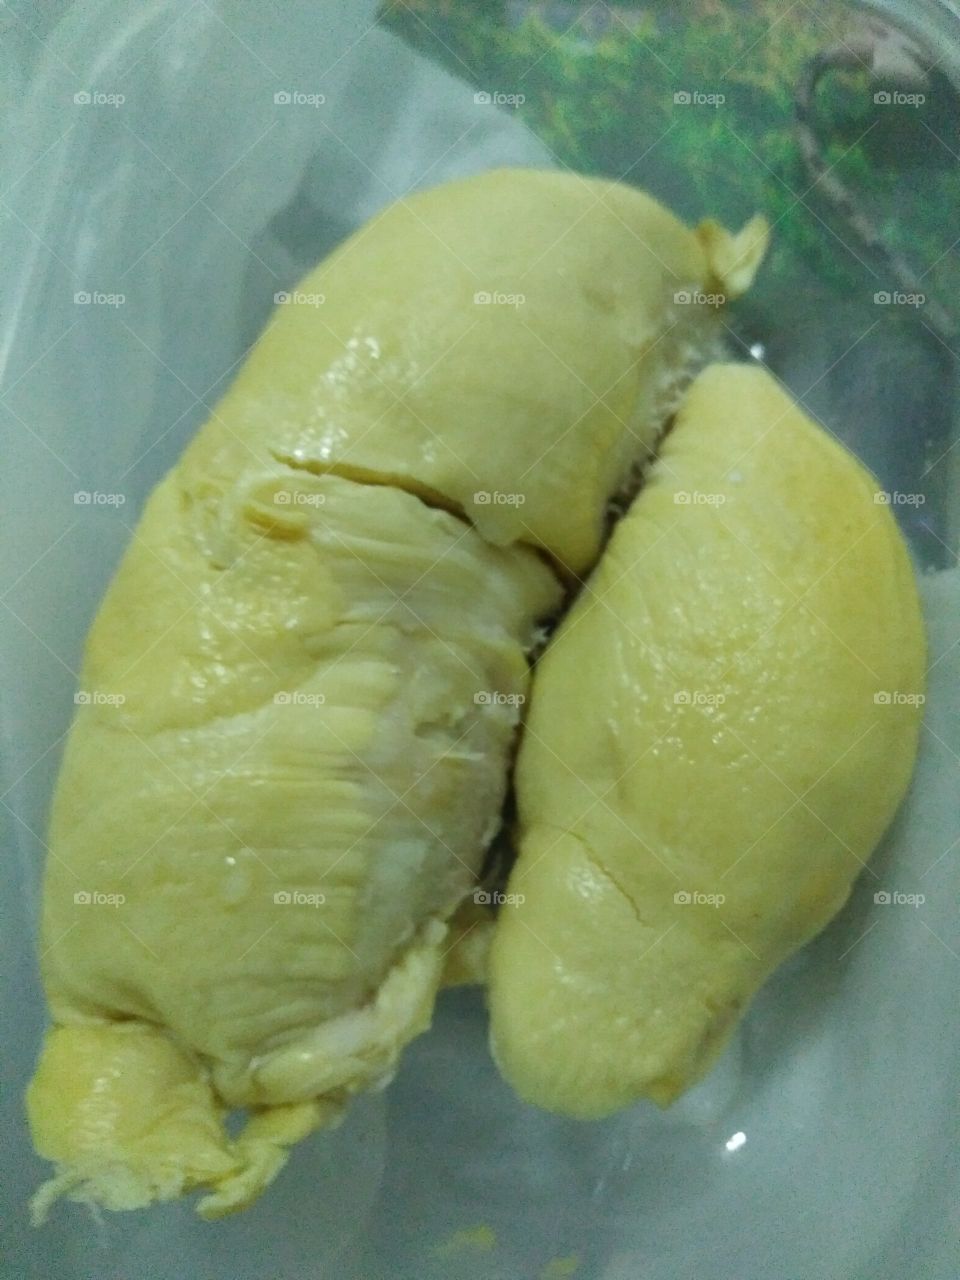 Let't eat durian